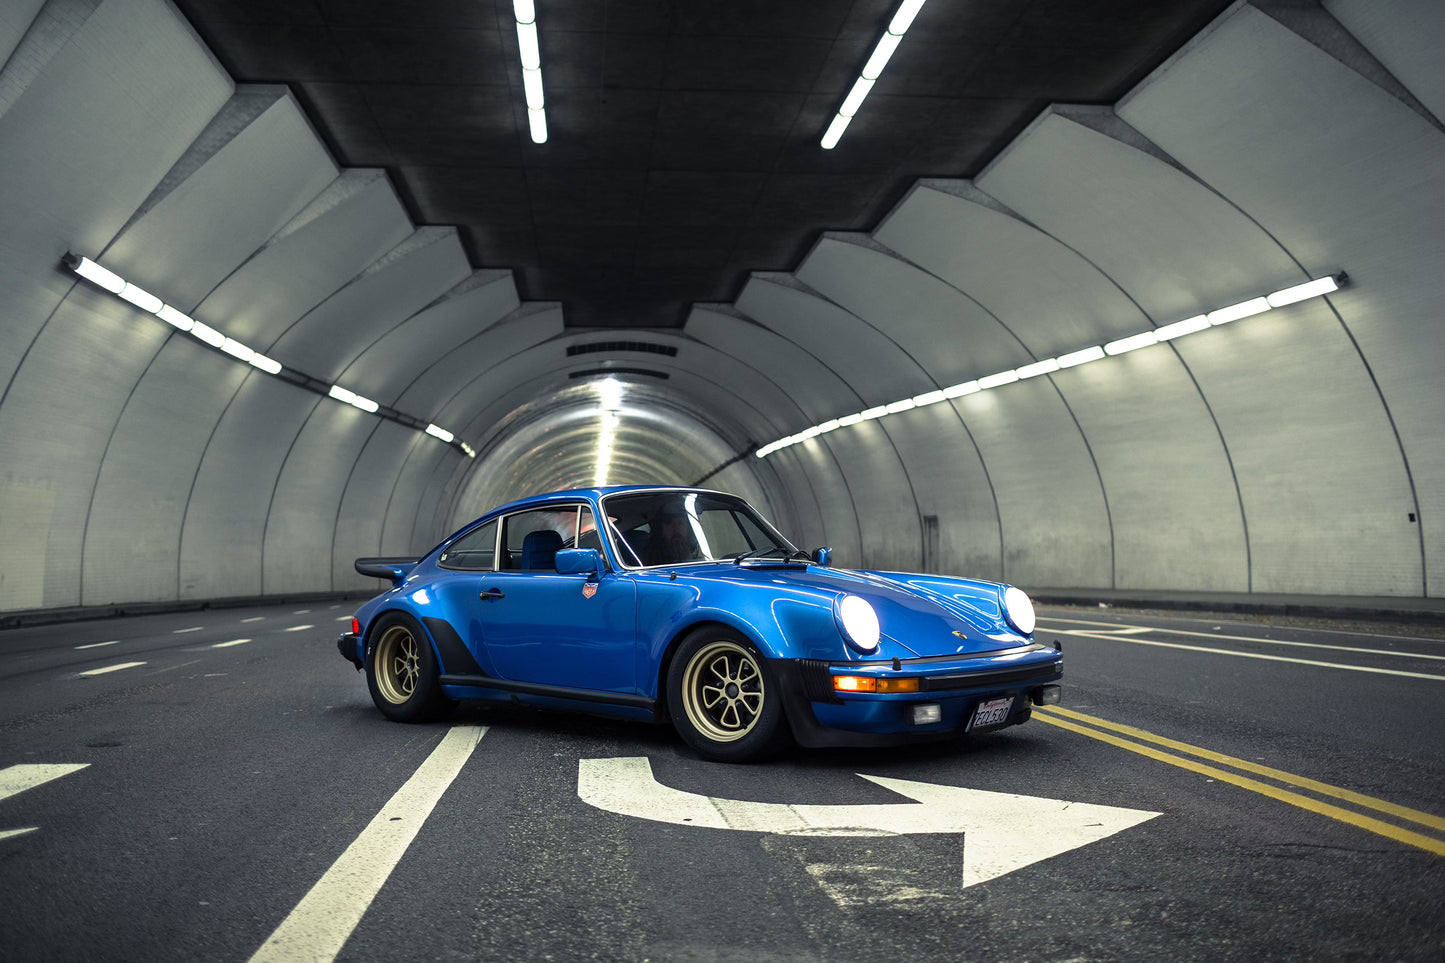 Porsche 930 Turbo LA 2nd Street Tunnel